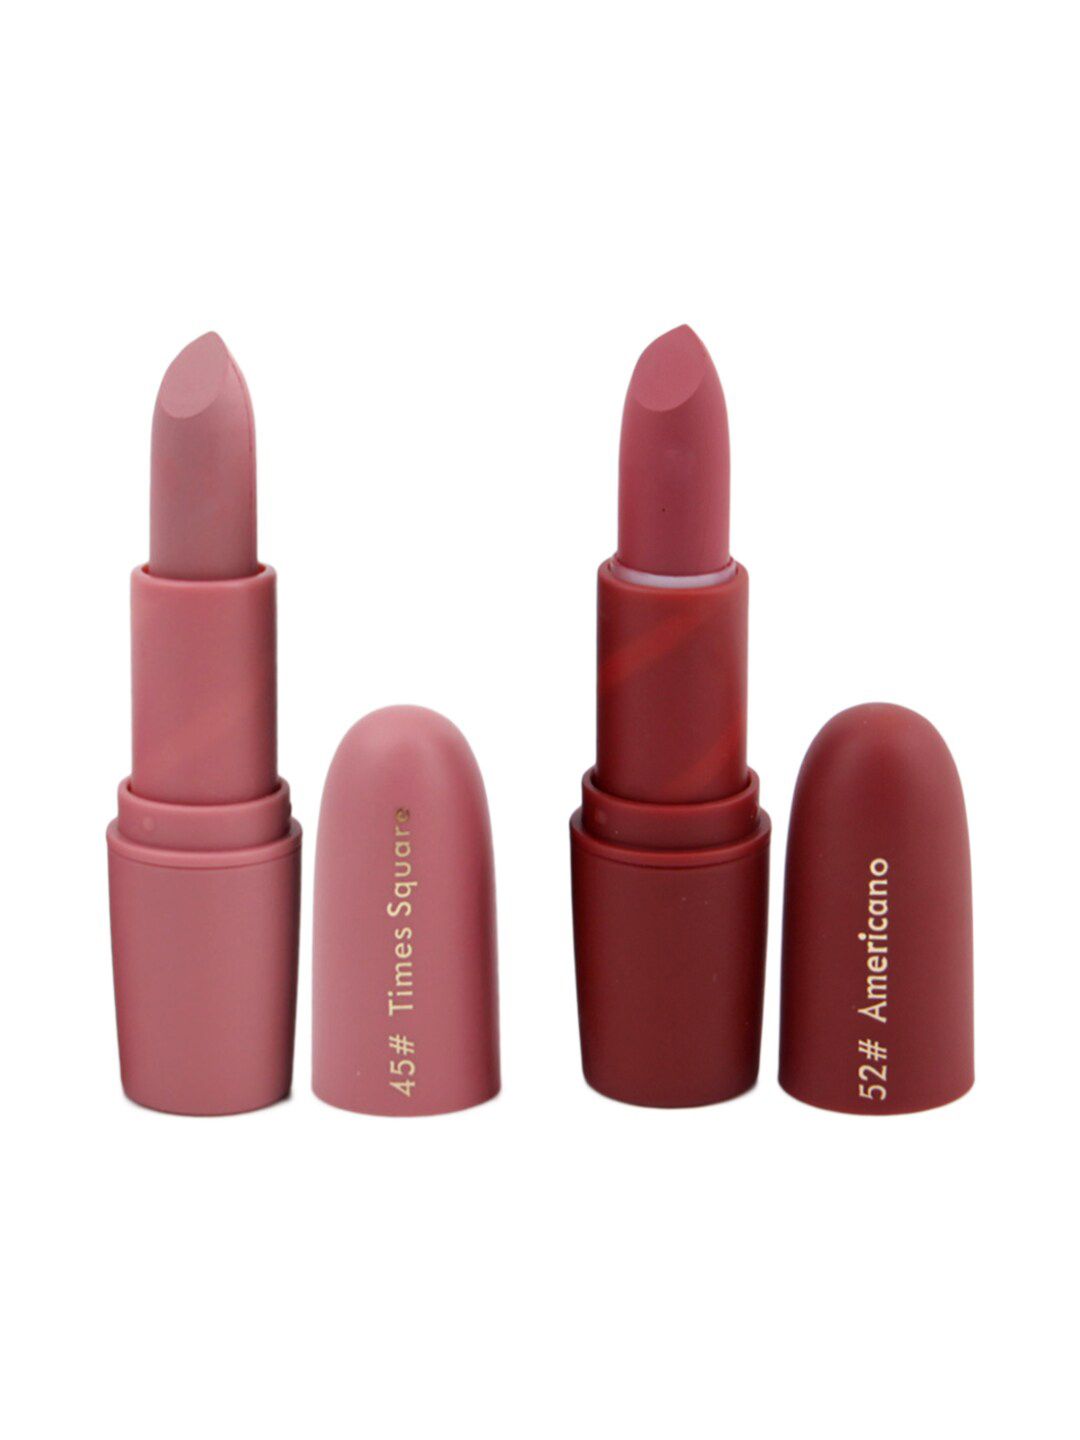 MISS ROSE Set of 2 Matte Creamy Lipsticks - Americano 52 & Times Square 45 Price in India